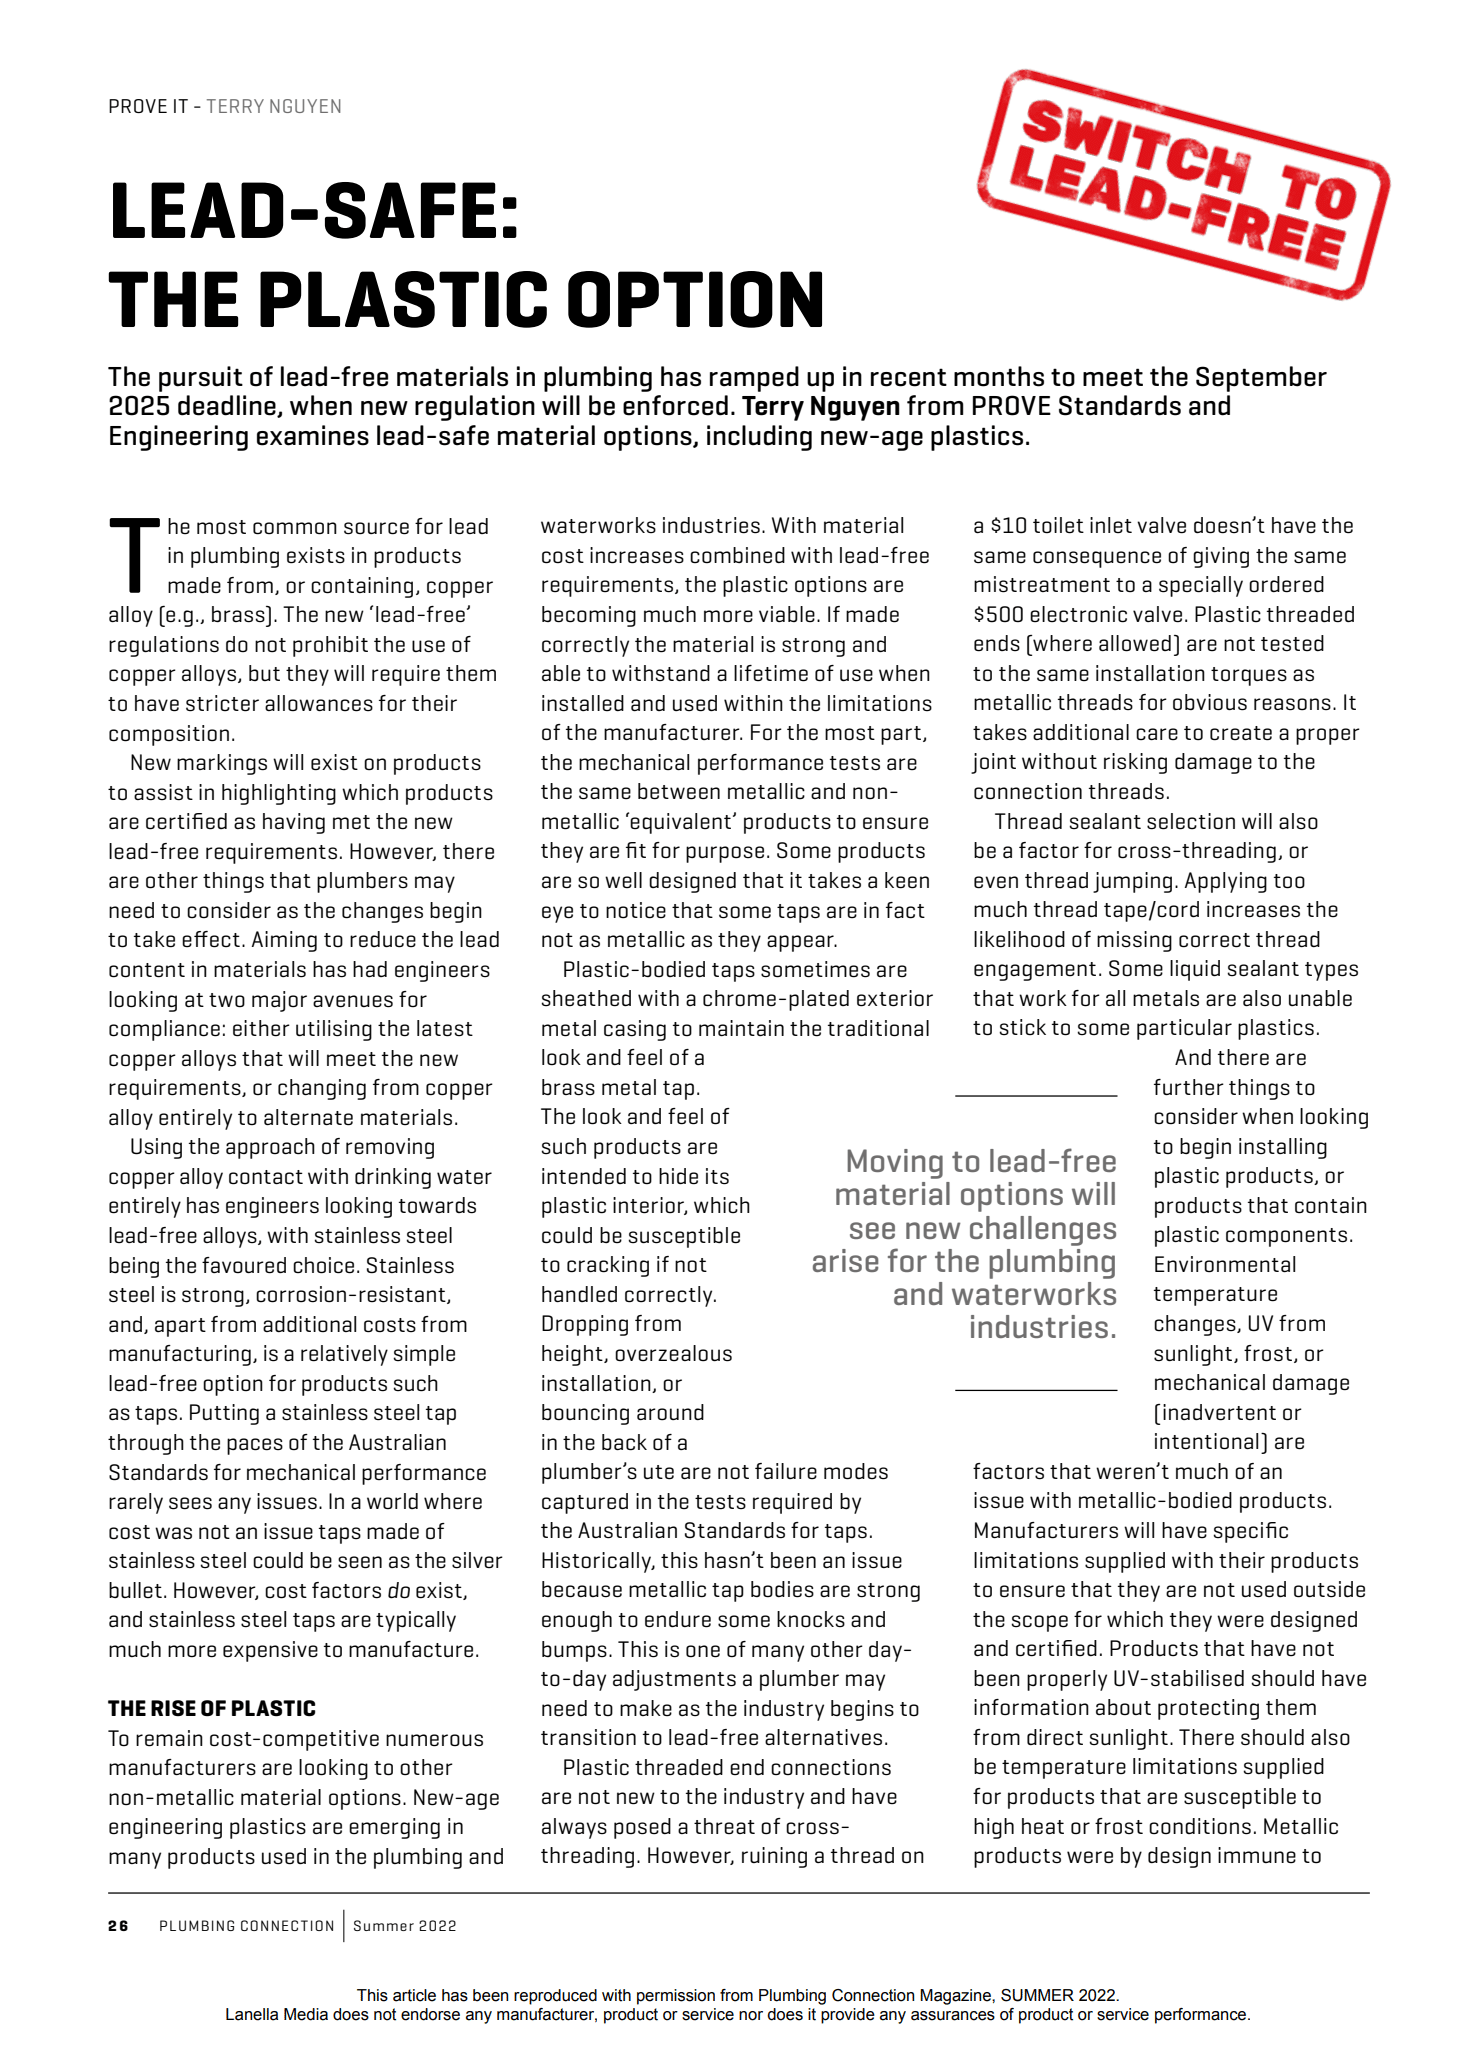 The Plastic Option